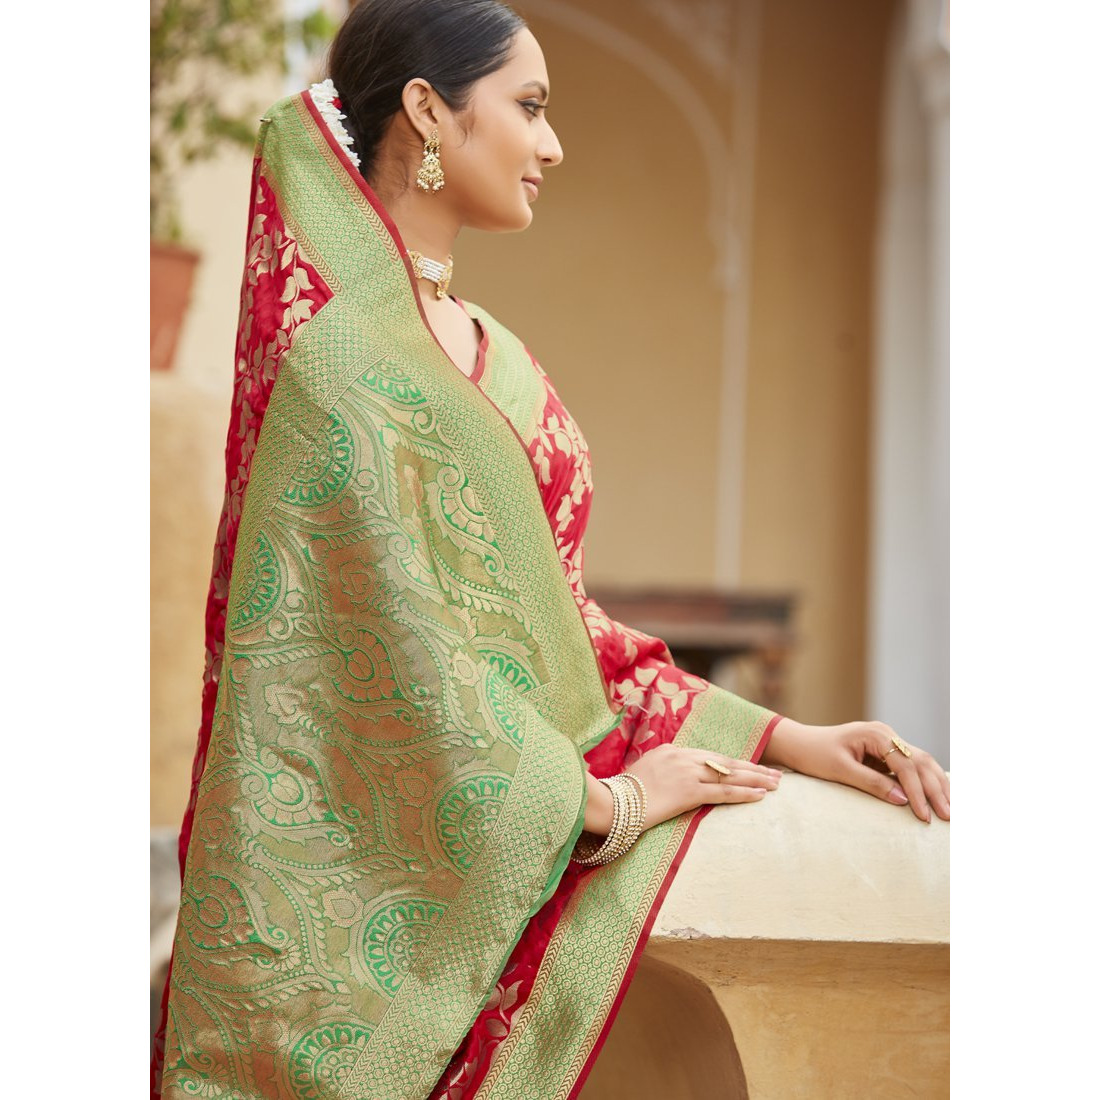 Designer Red Banarasi Silk Traditional Saree For Women